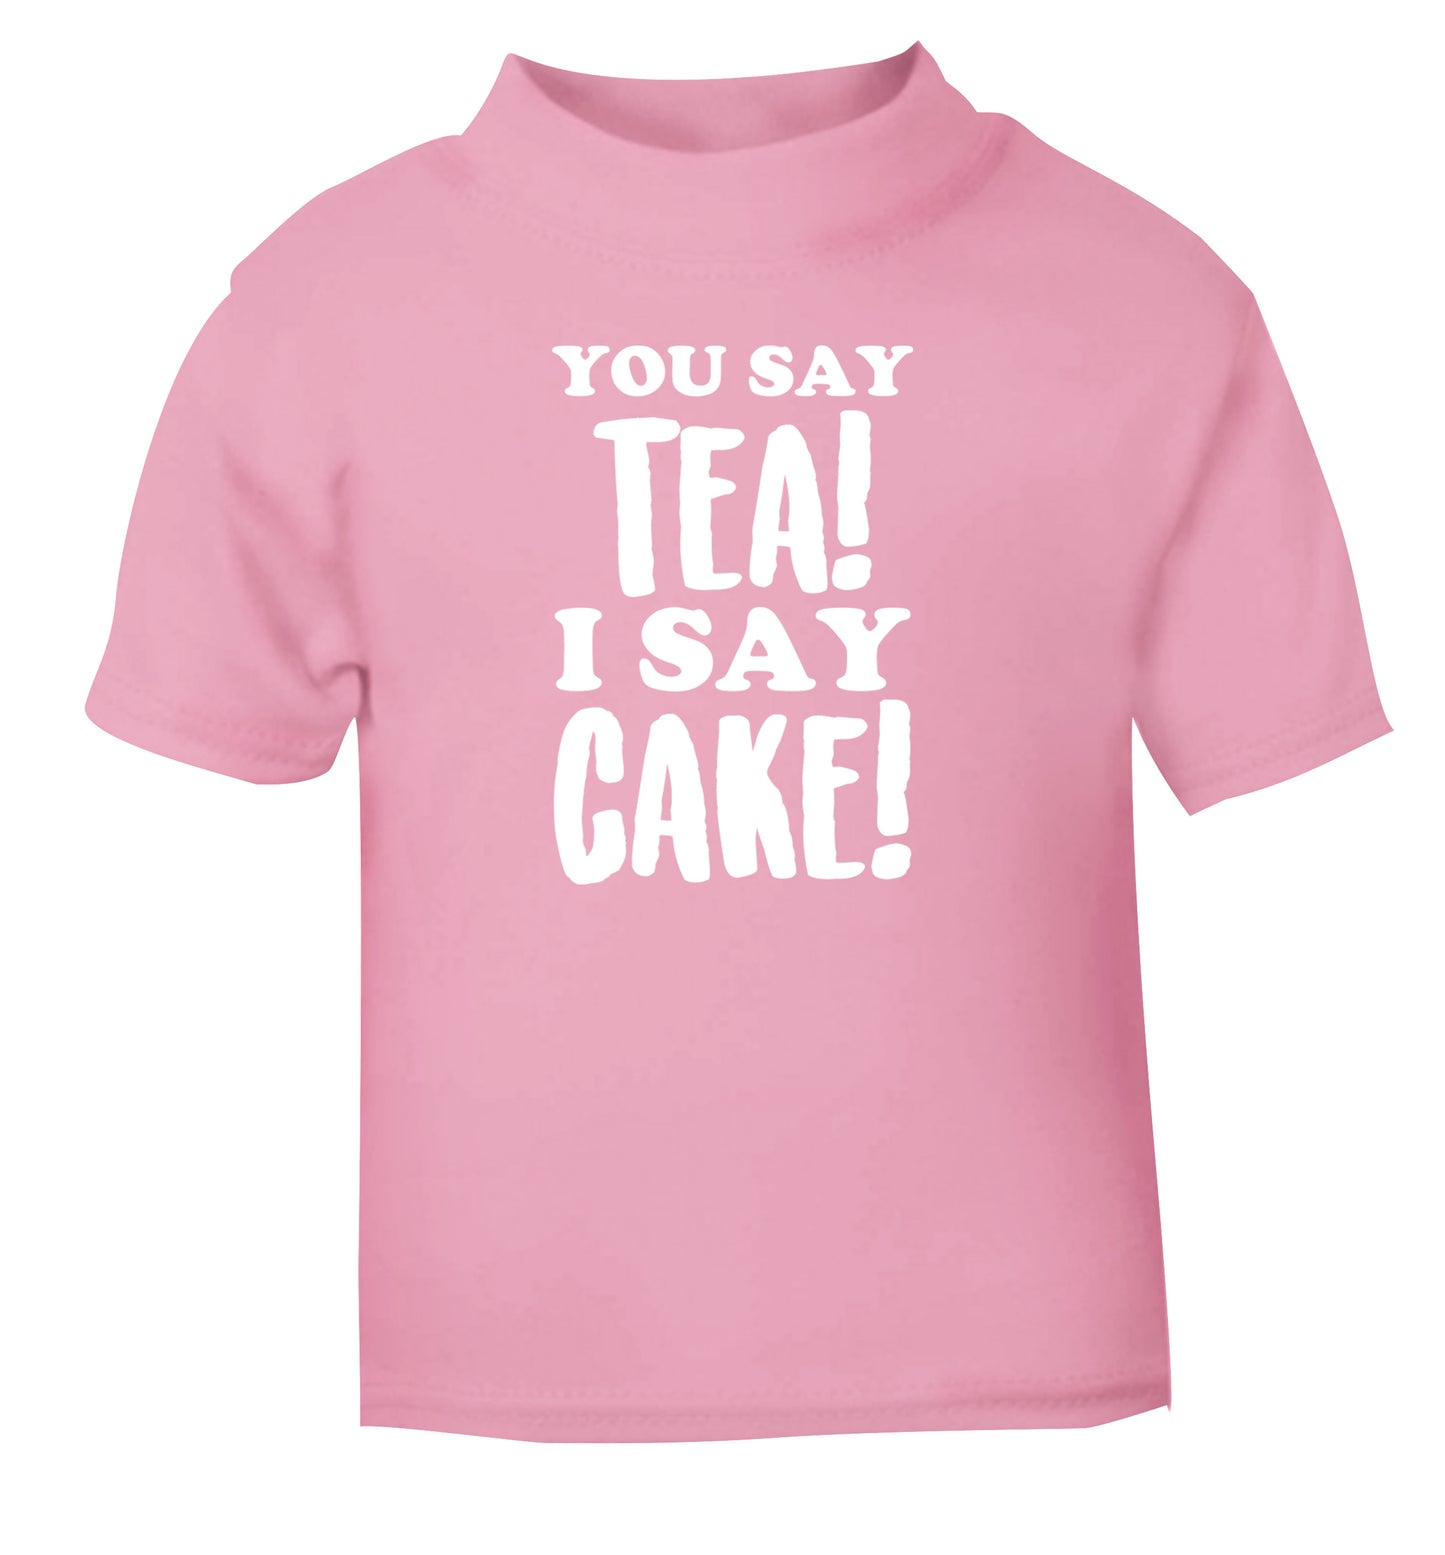 You say tea I say cake! light pink Baby Toddler Tshirt 2 Years